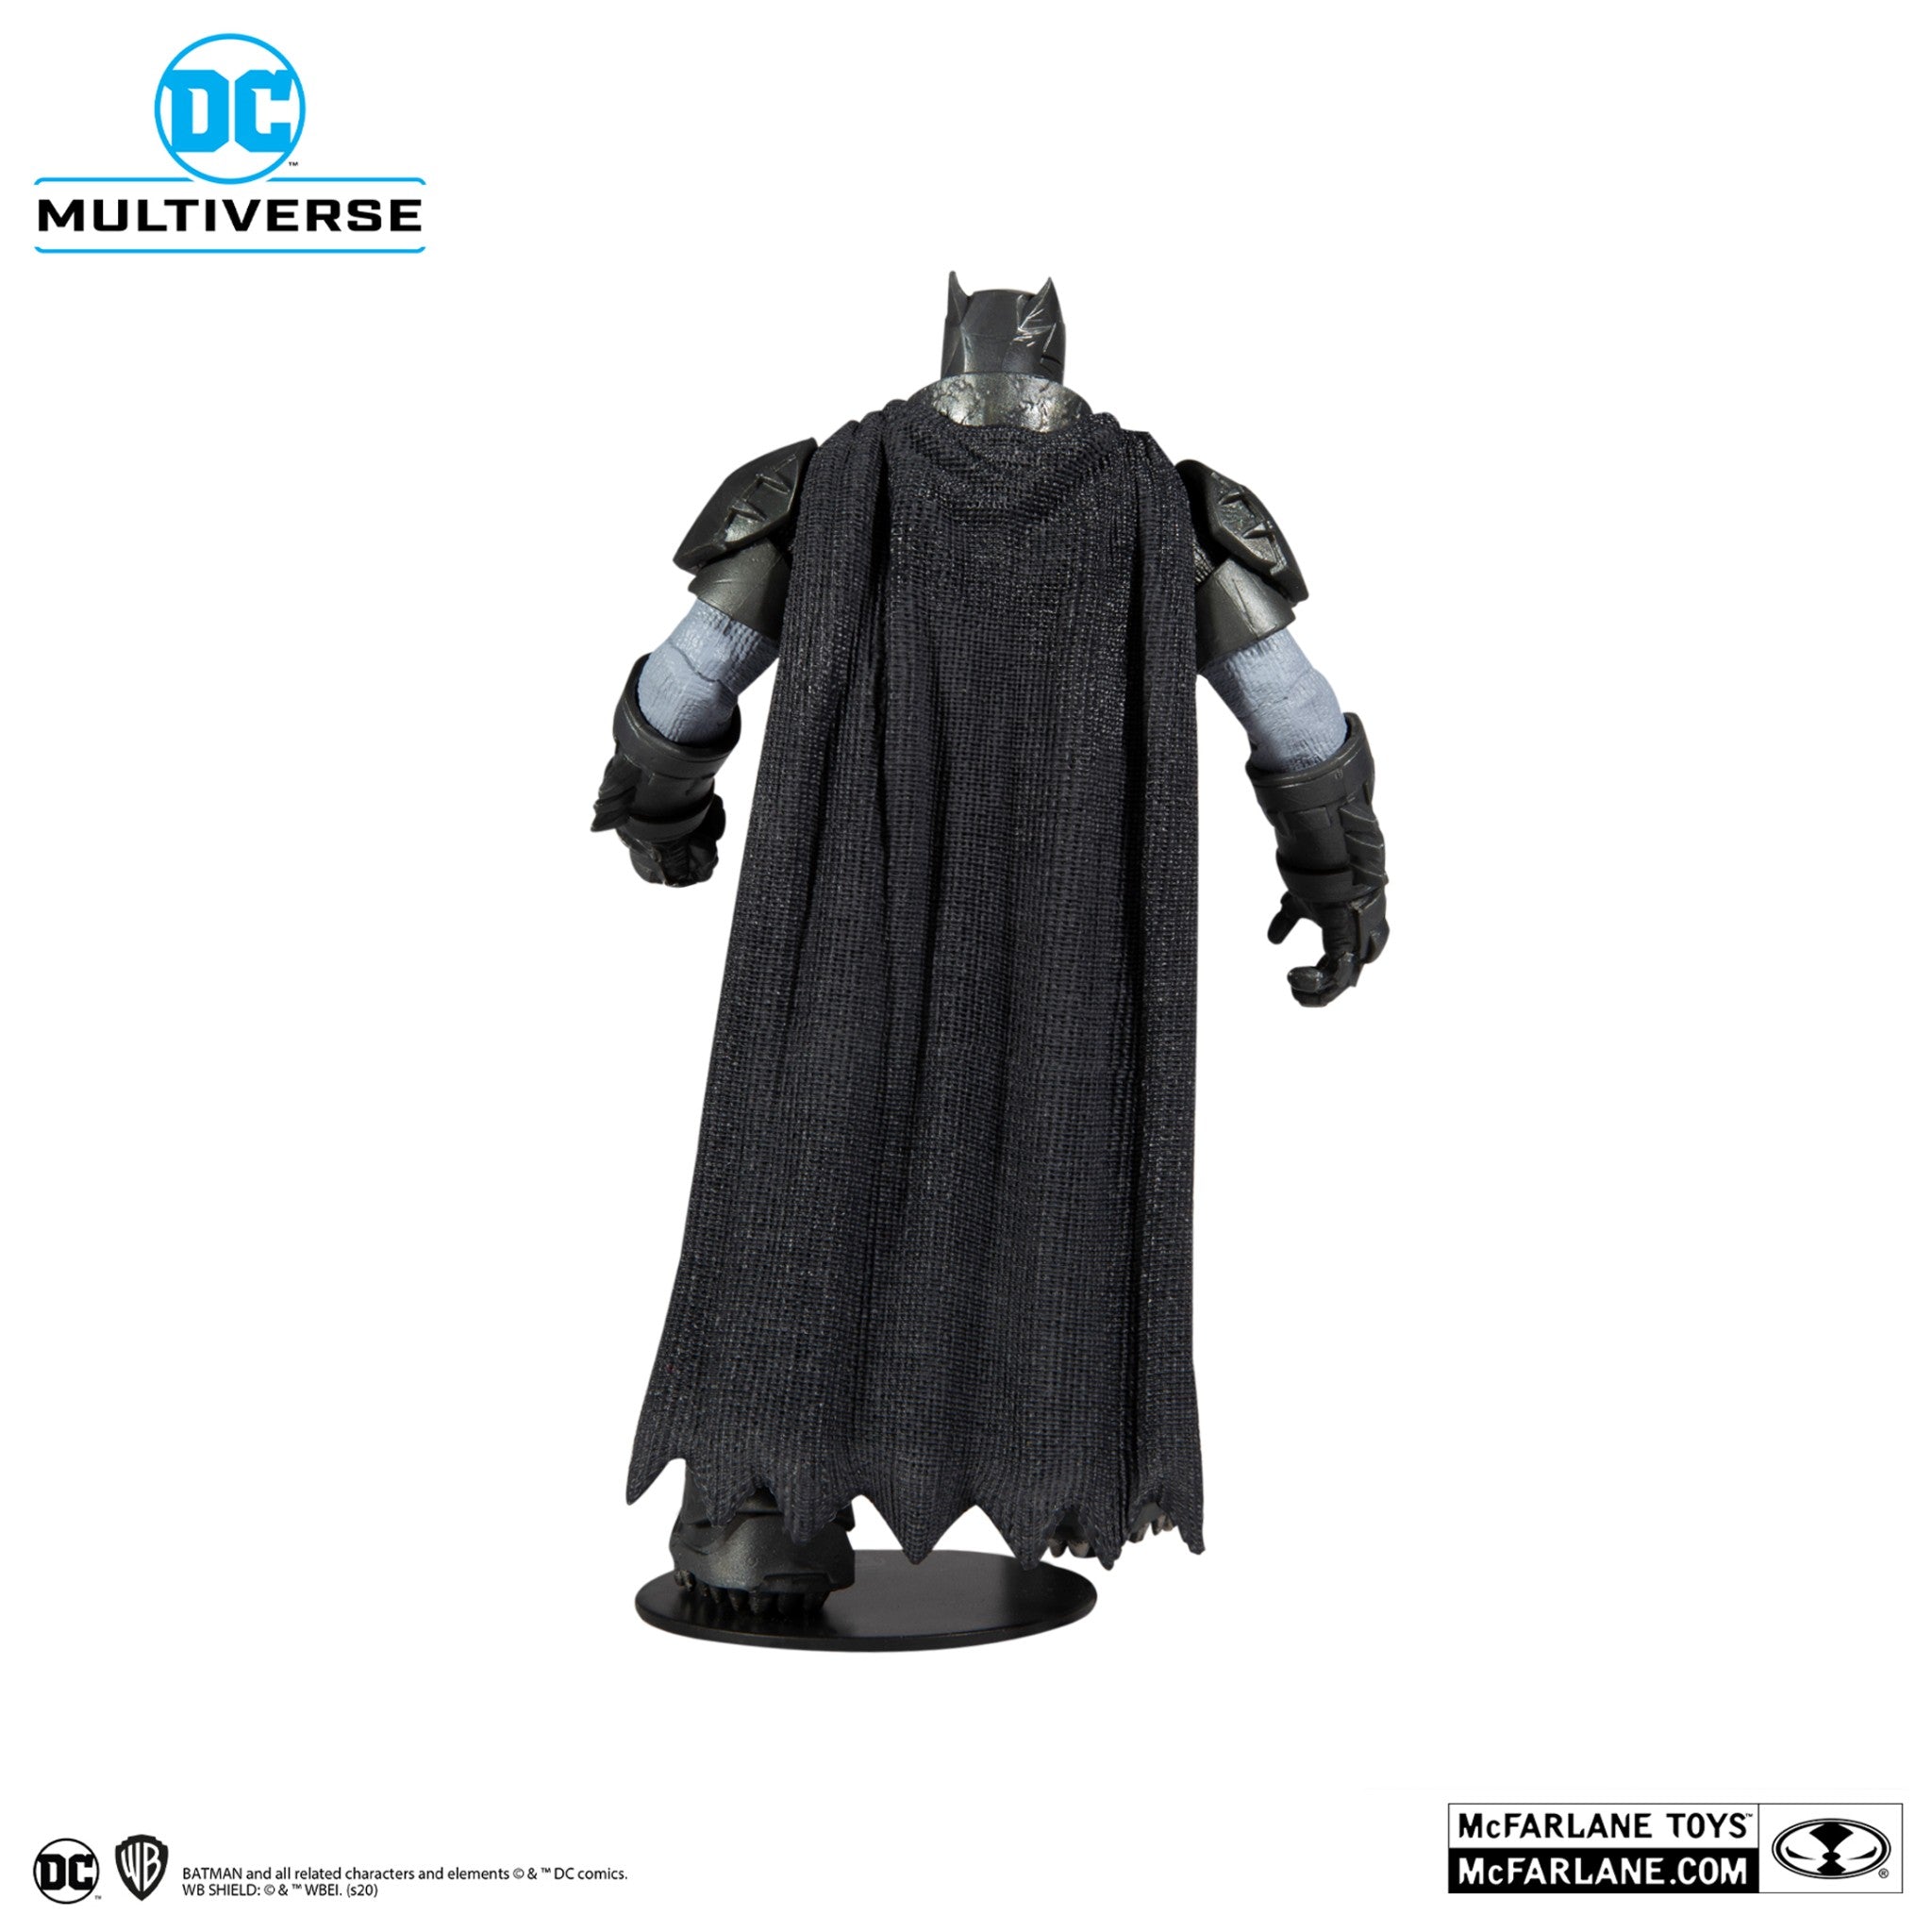 DC Multiverse The Dark Knight Returns Armored Batman - McFarlane Toys-4